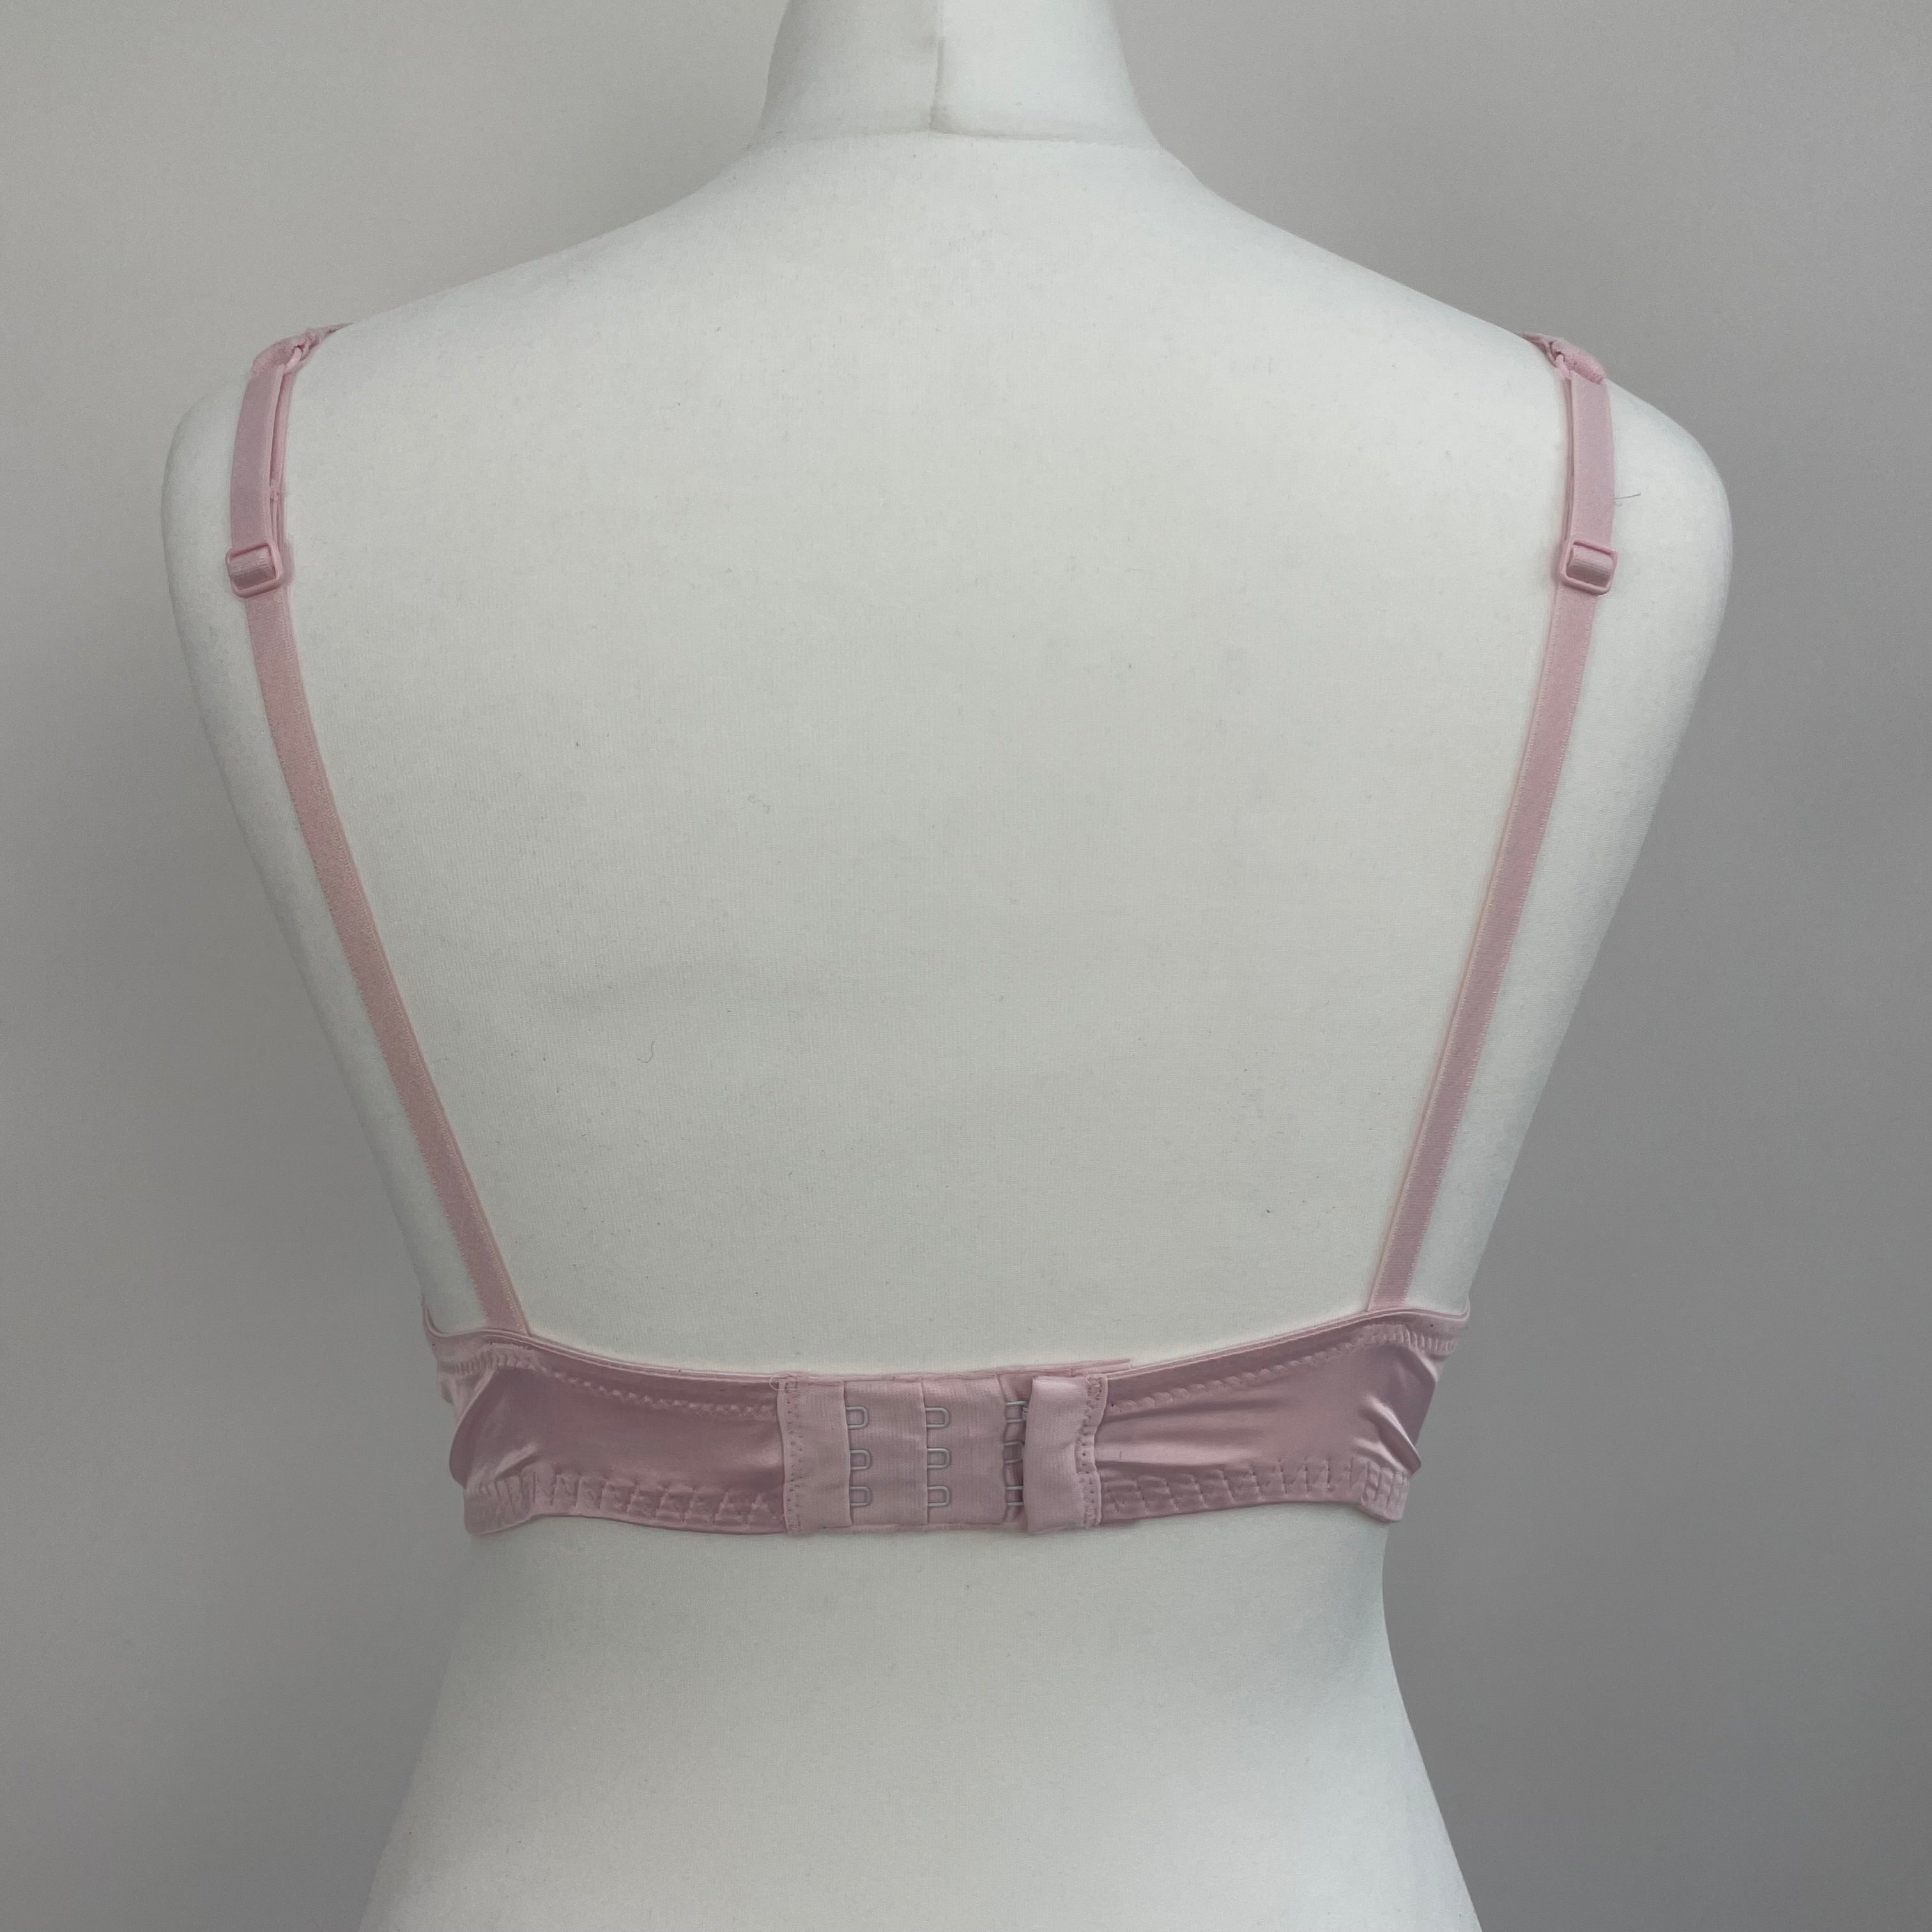 COASTAL GRANDMA DROP  small pink satin bra with heart lace detail